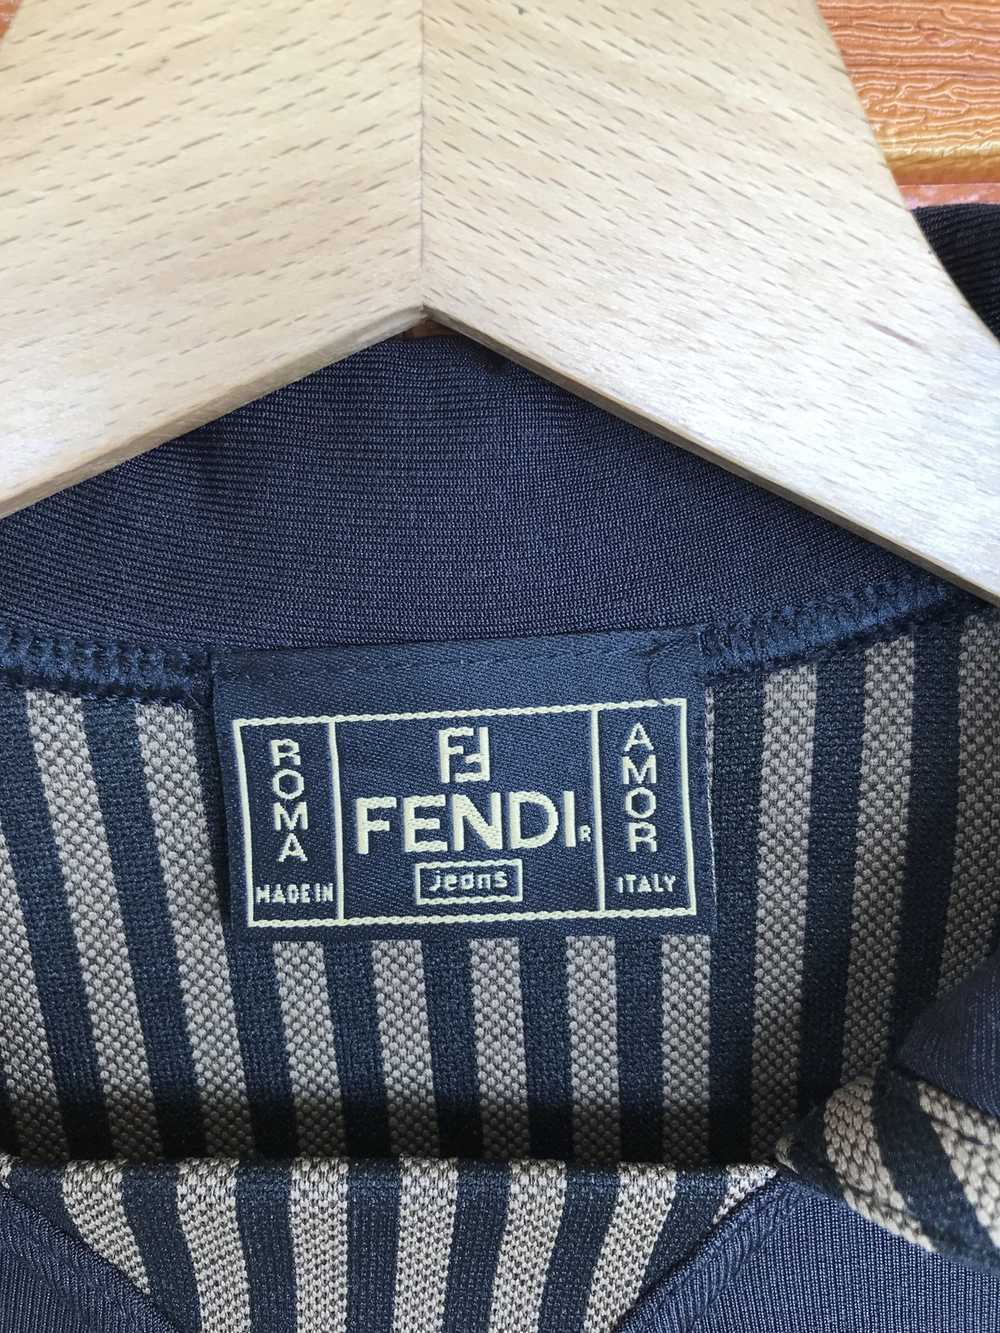 Fendi Fendi Made In Italy Longsleeve T-Shirt - image 4